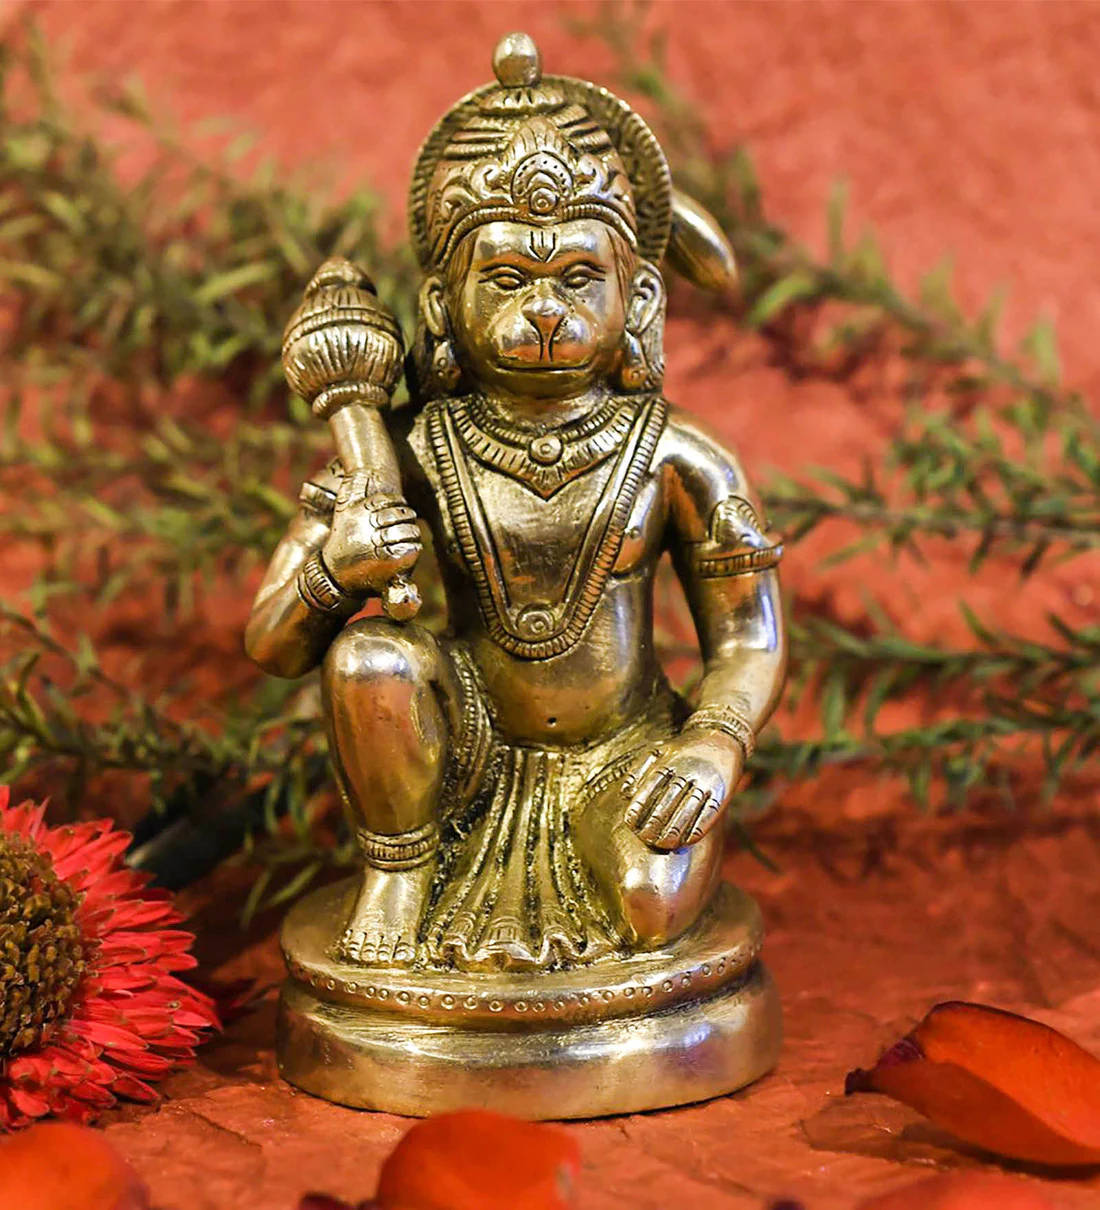 Kneeling Lord Hanuman 3d Gold Figure Background